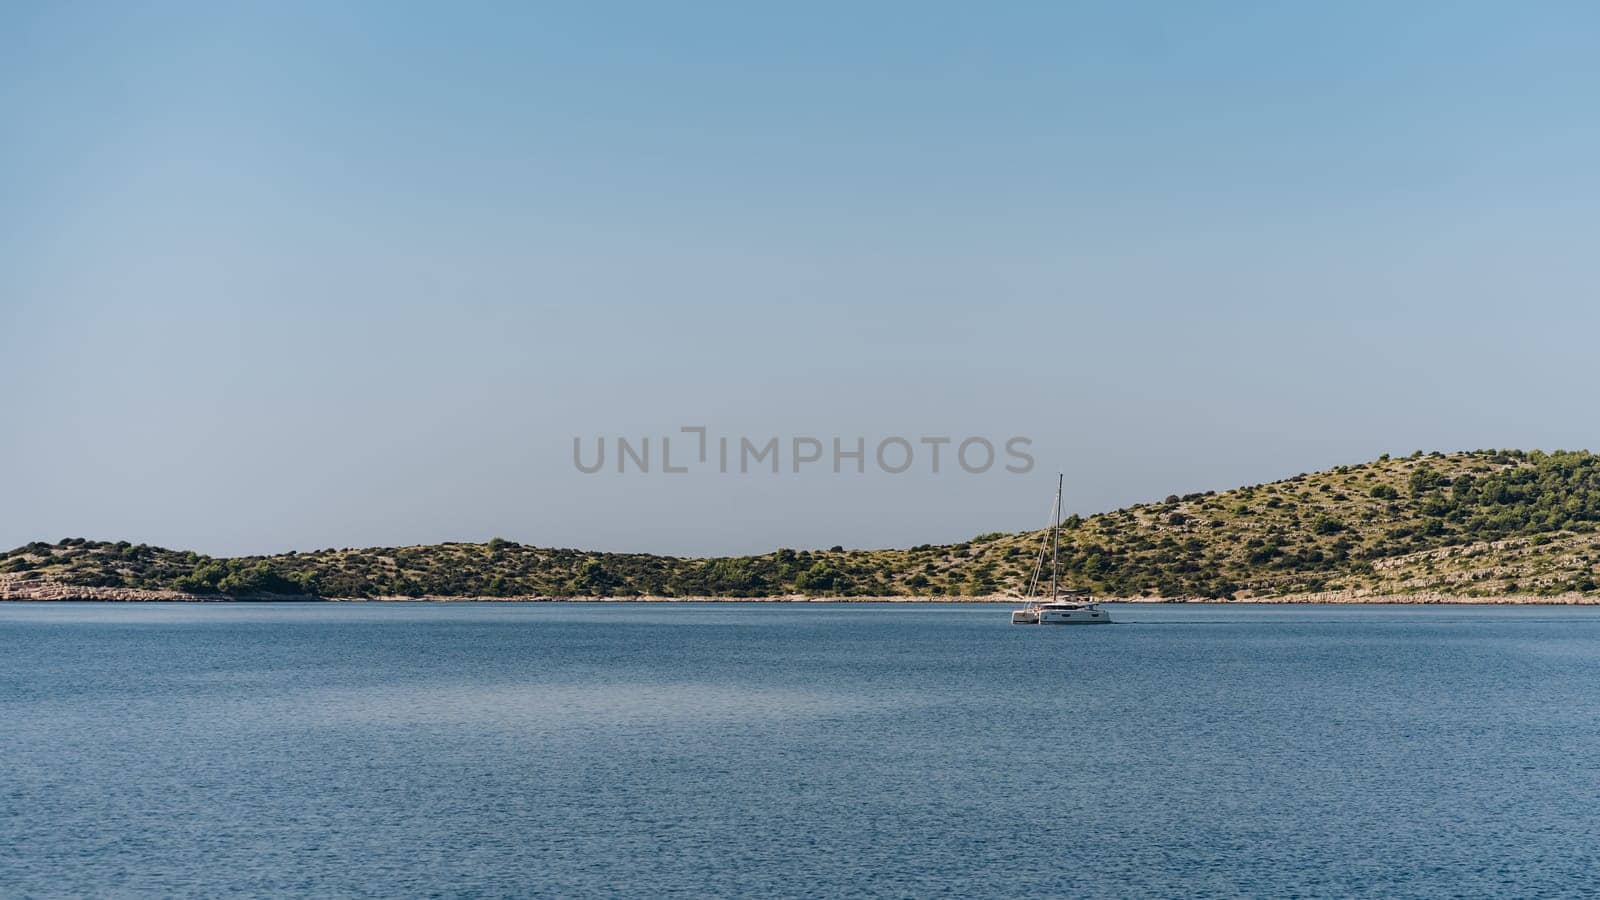 Yacht sailing near shore of Dugi Otok island, in blue waters of Adriatic Sea, Croatia